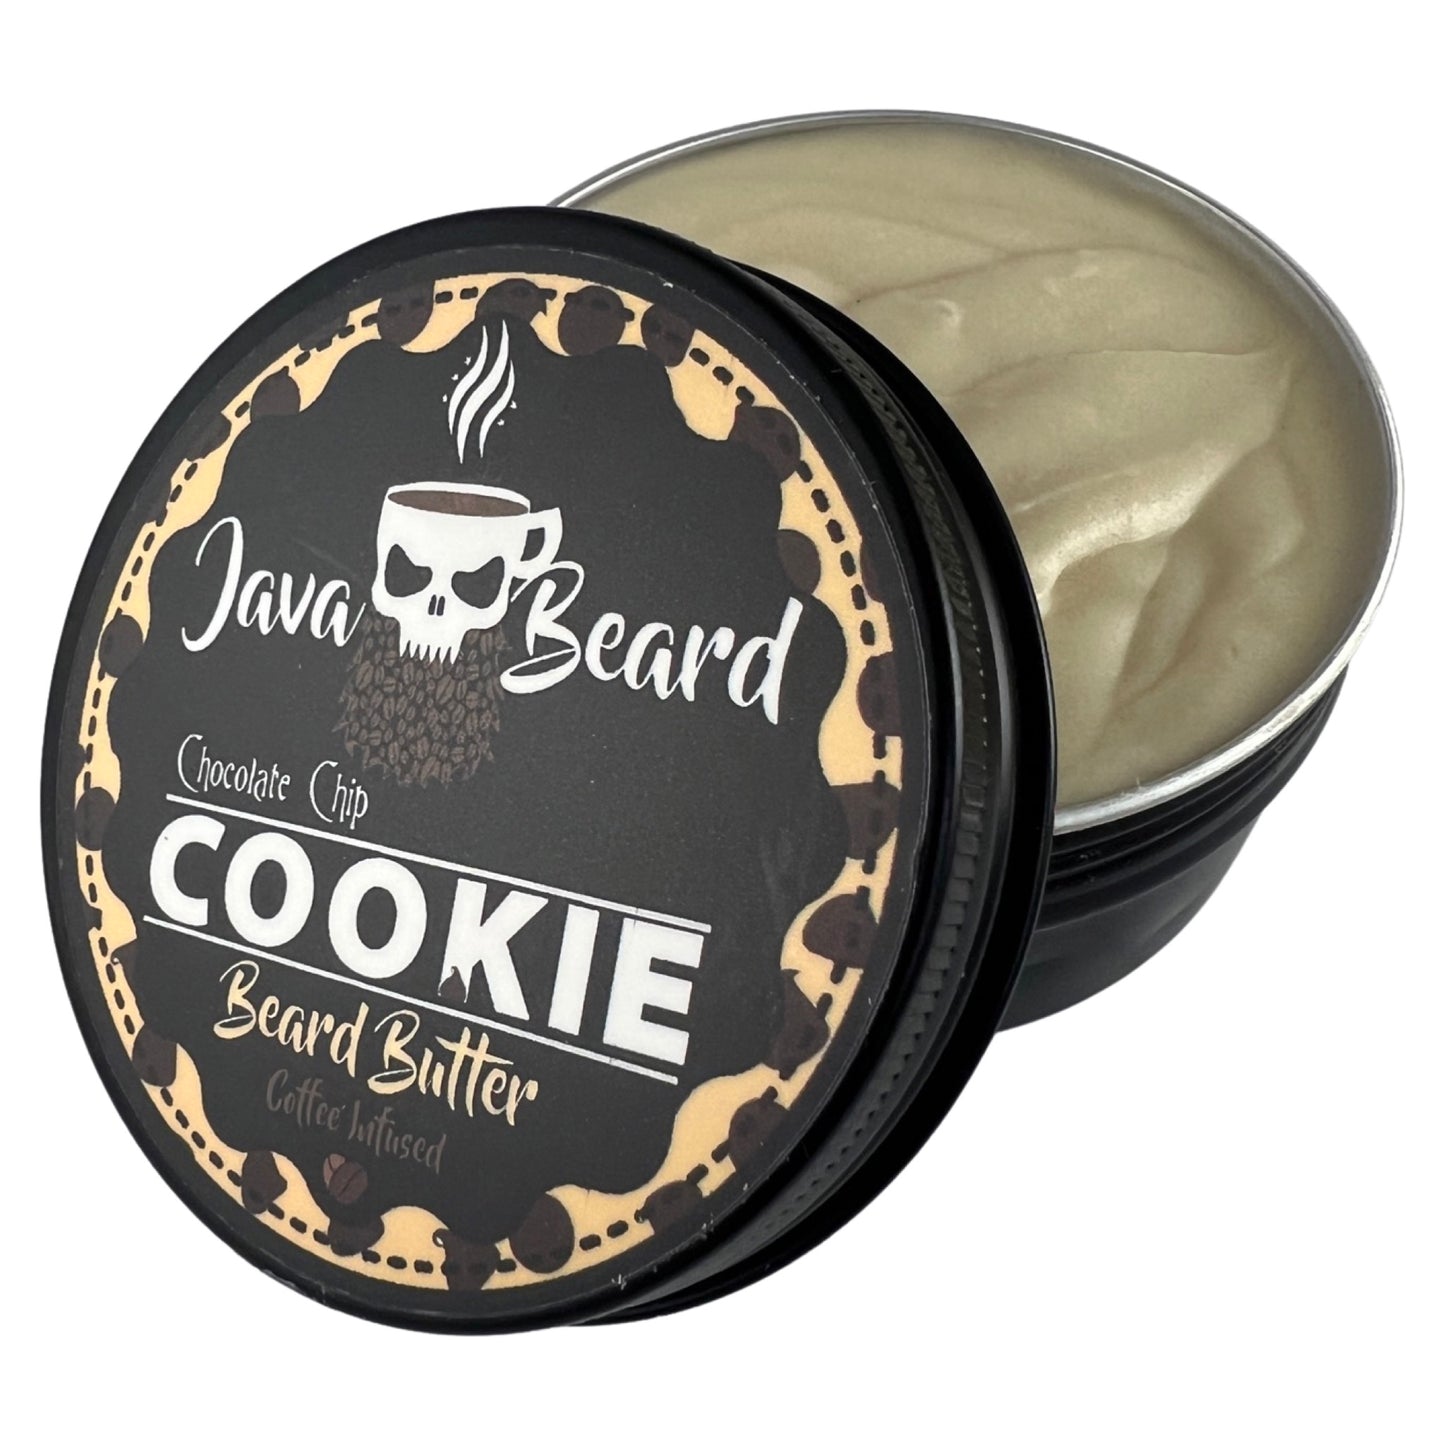 Chocolate Chip Cookie Beard Butter